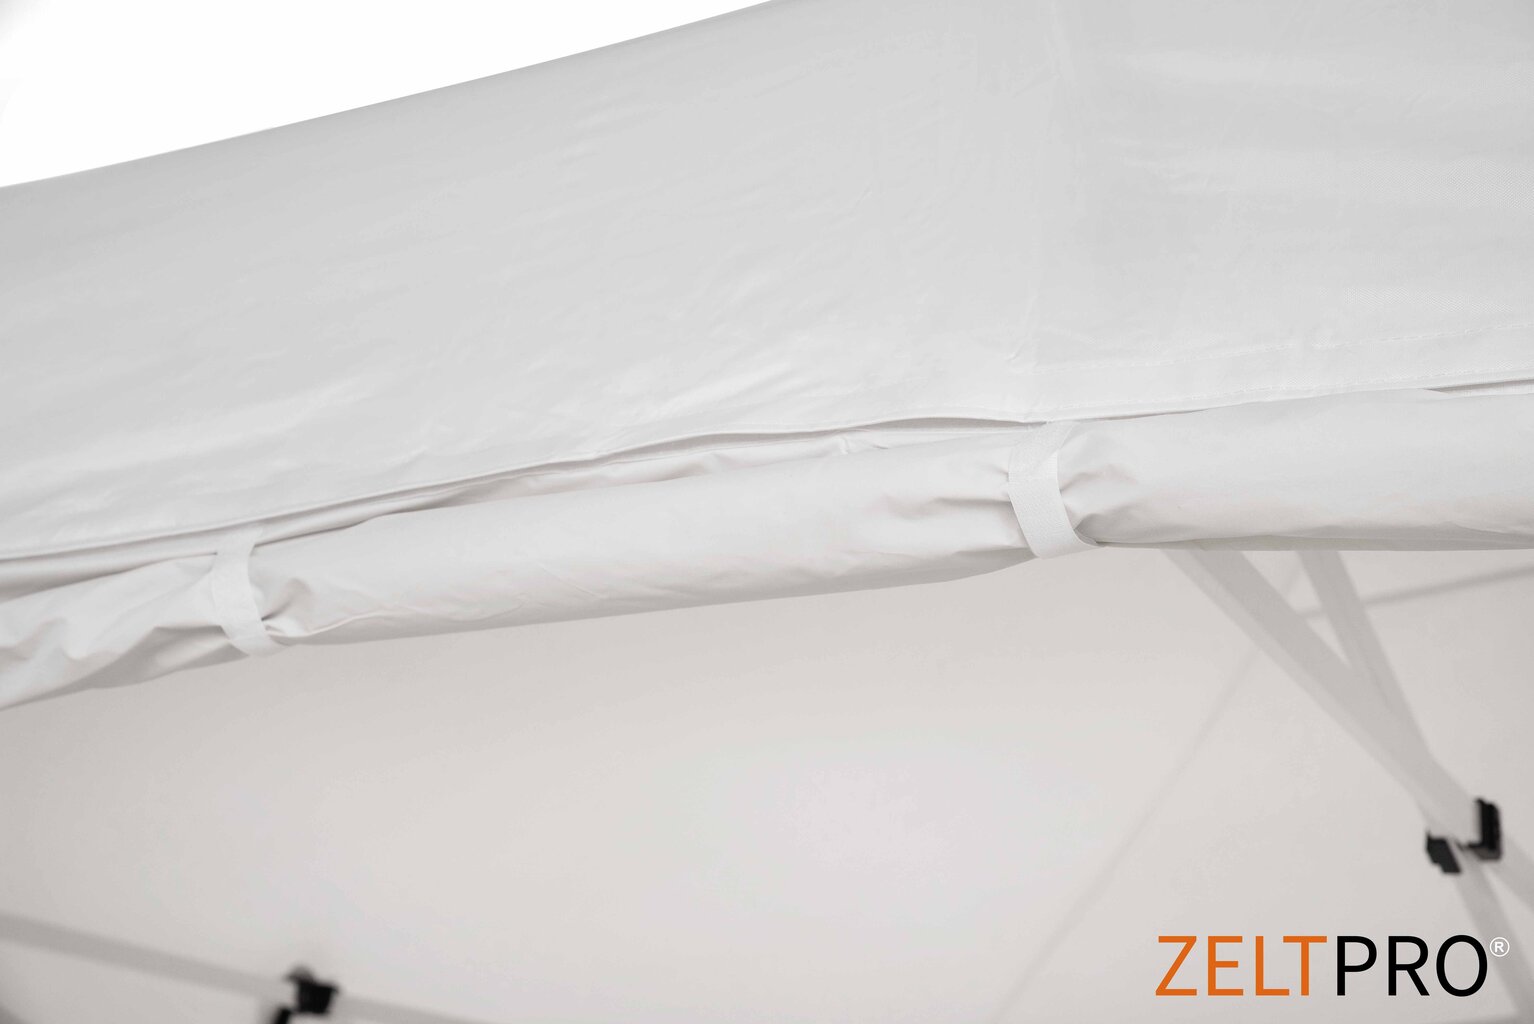 Pop-up telk 3x4,5 valge Zeltpro PROFRAME цена и информация | Telgid | kaup24.ee